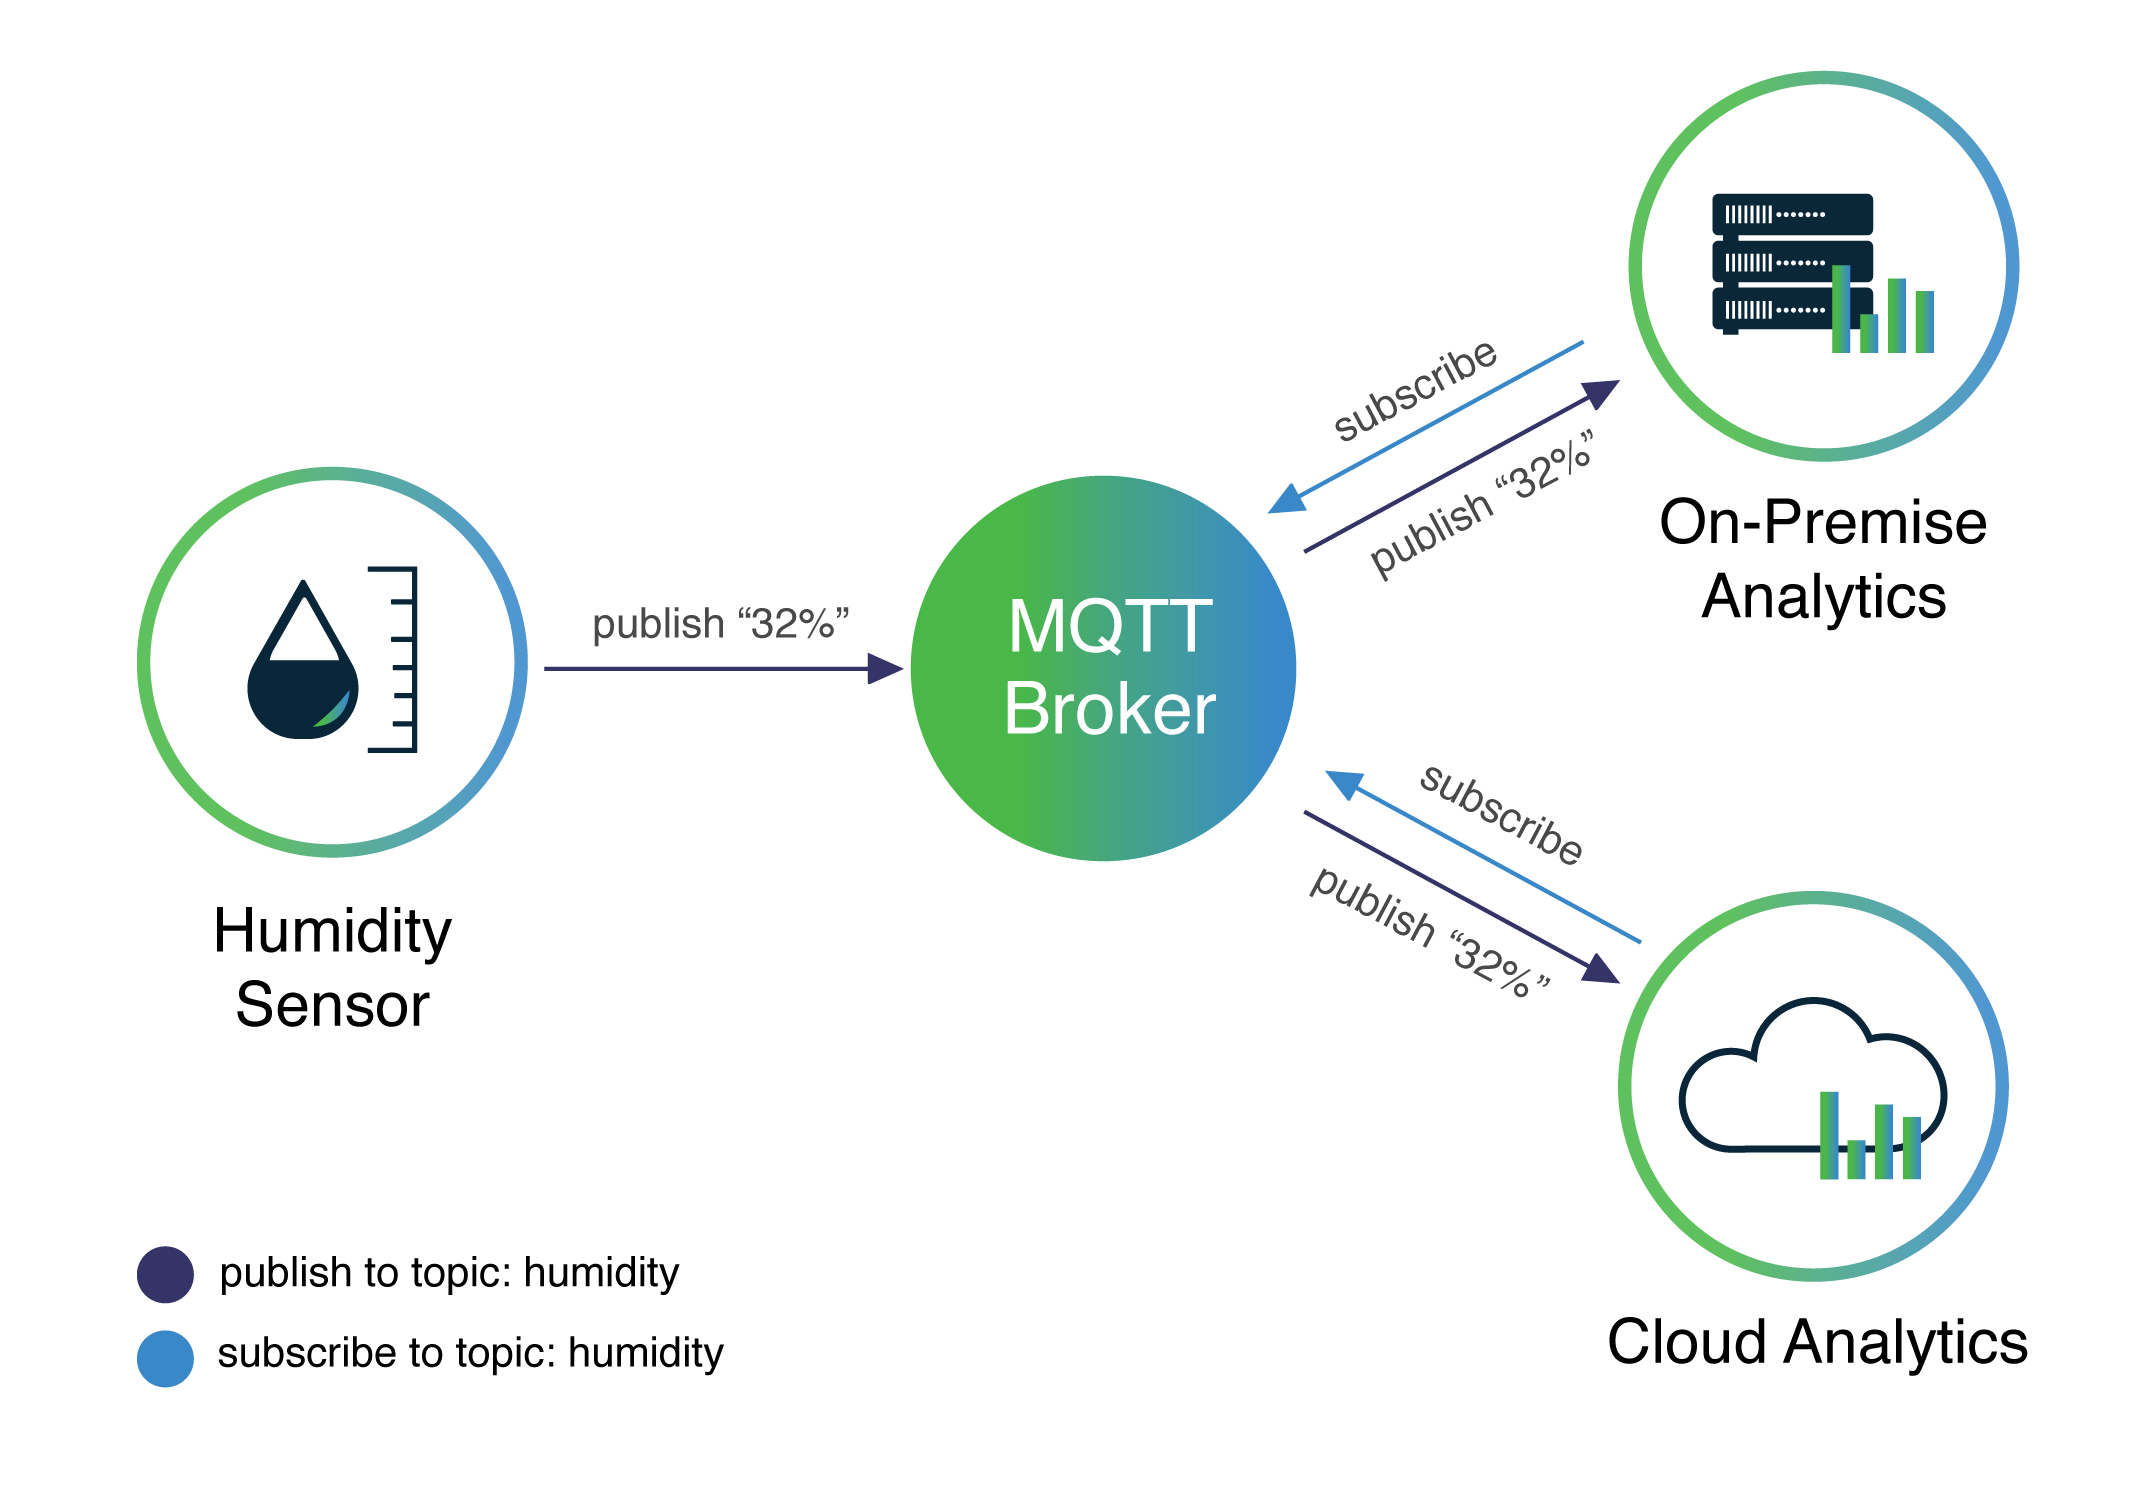 MQTT in the IoT architecture